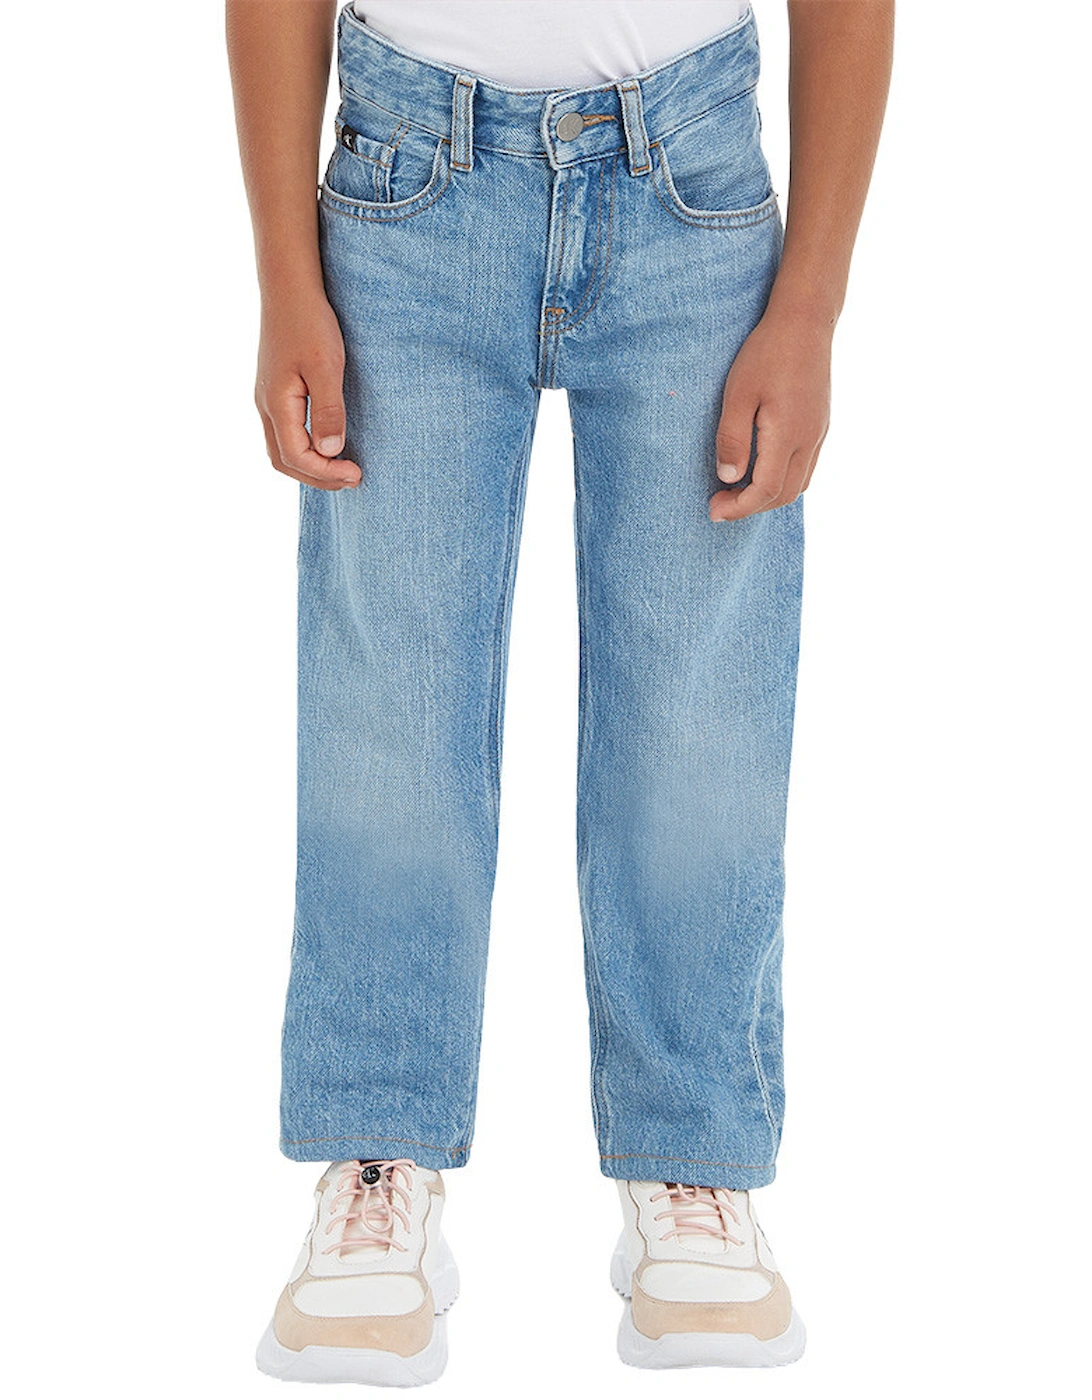 Juniors Straight Leg Jeans (Blue)